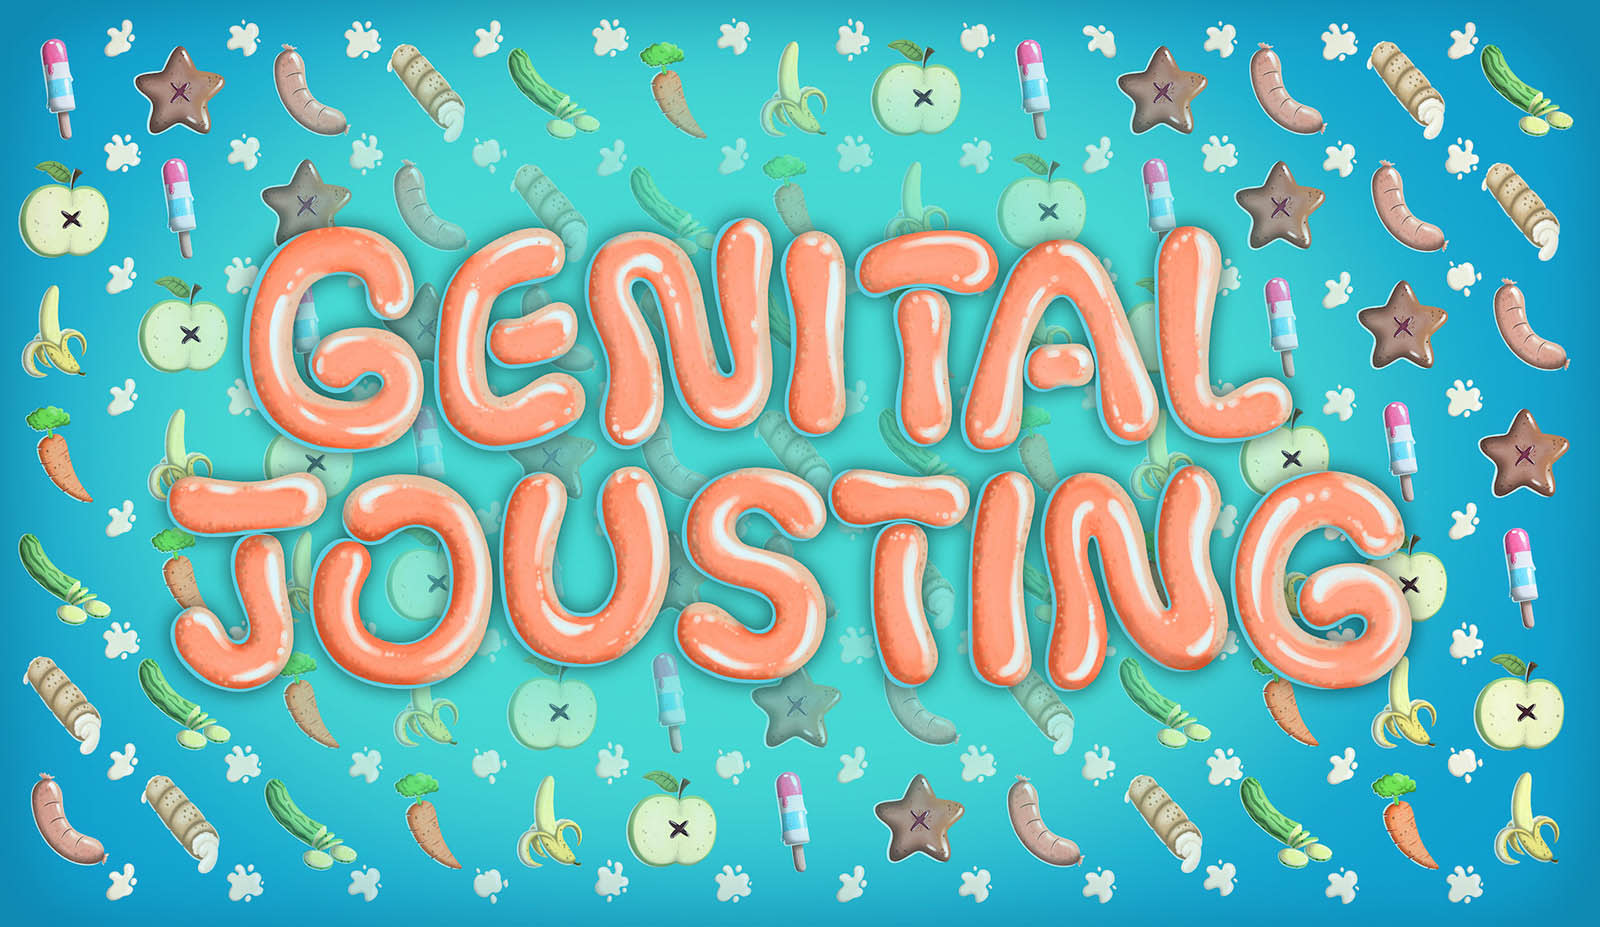 genital jousting review